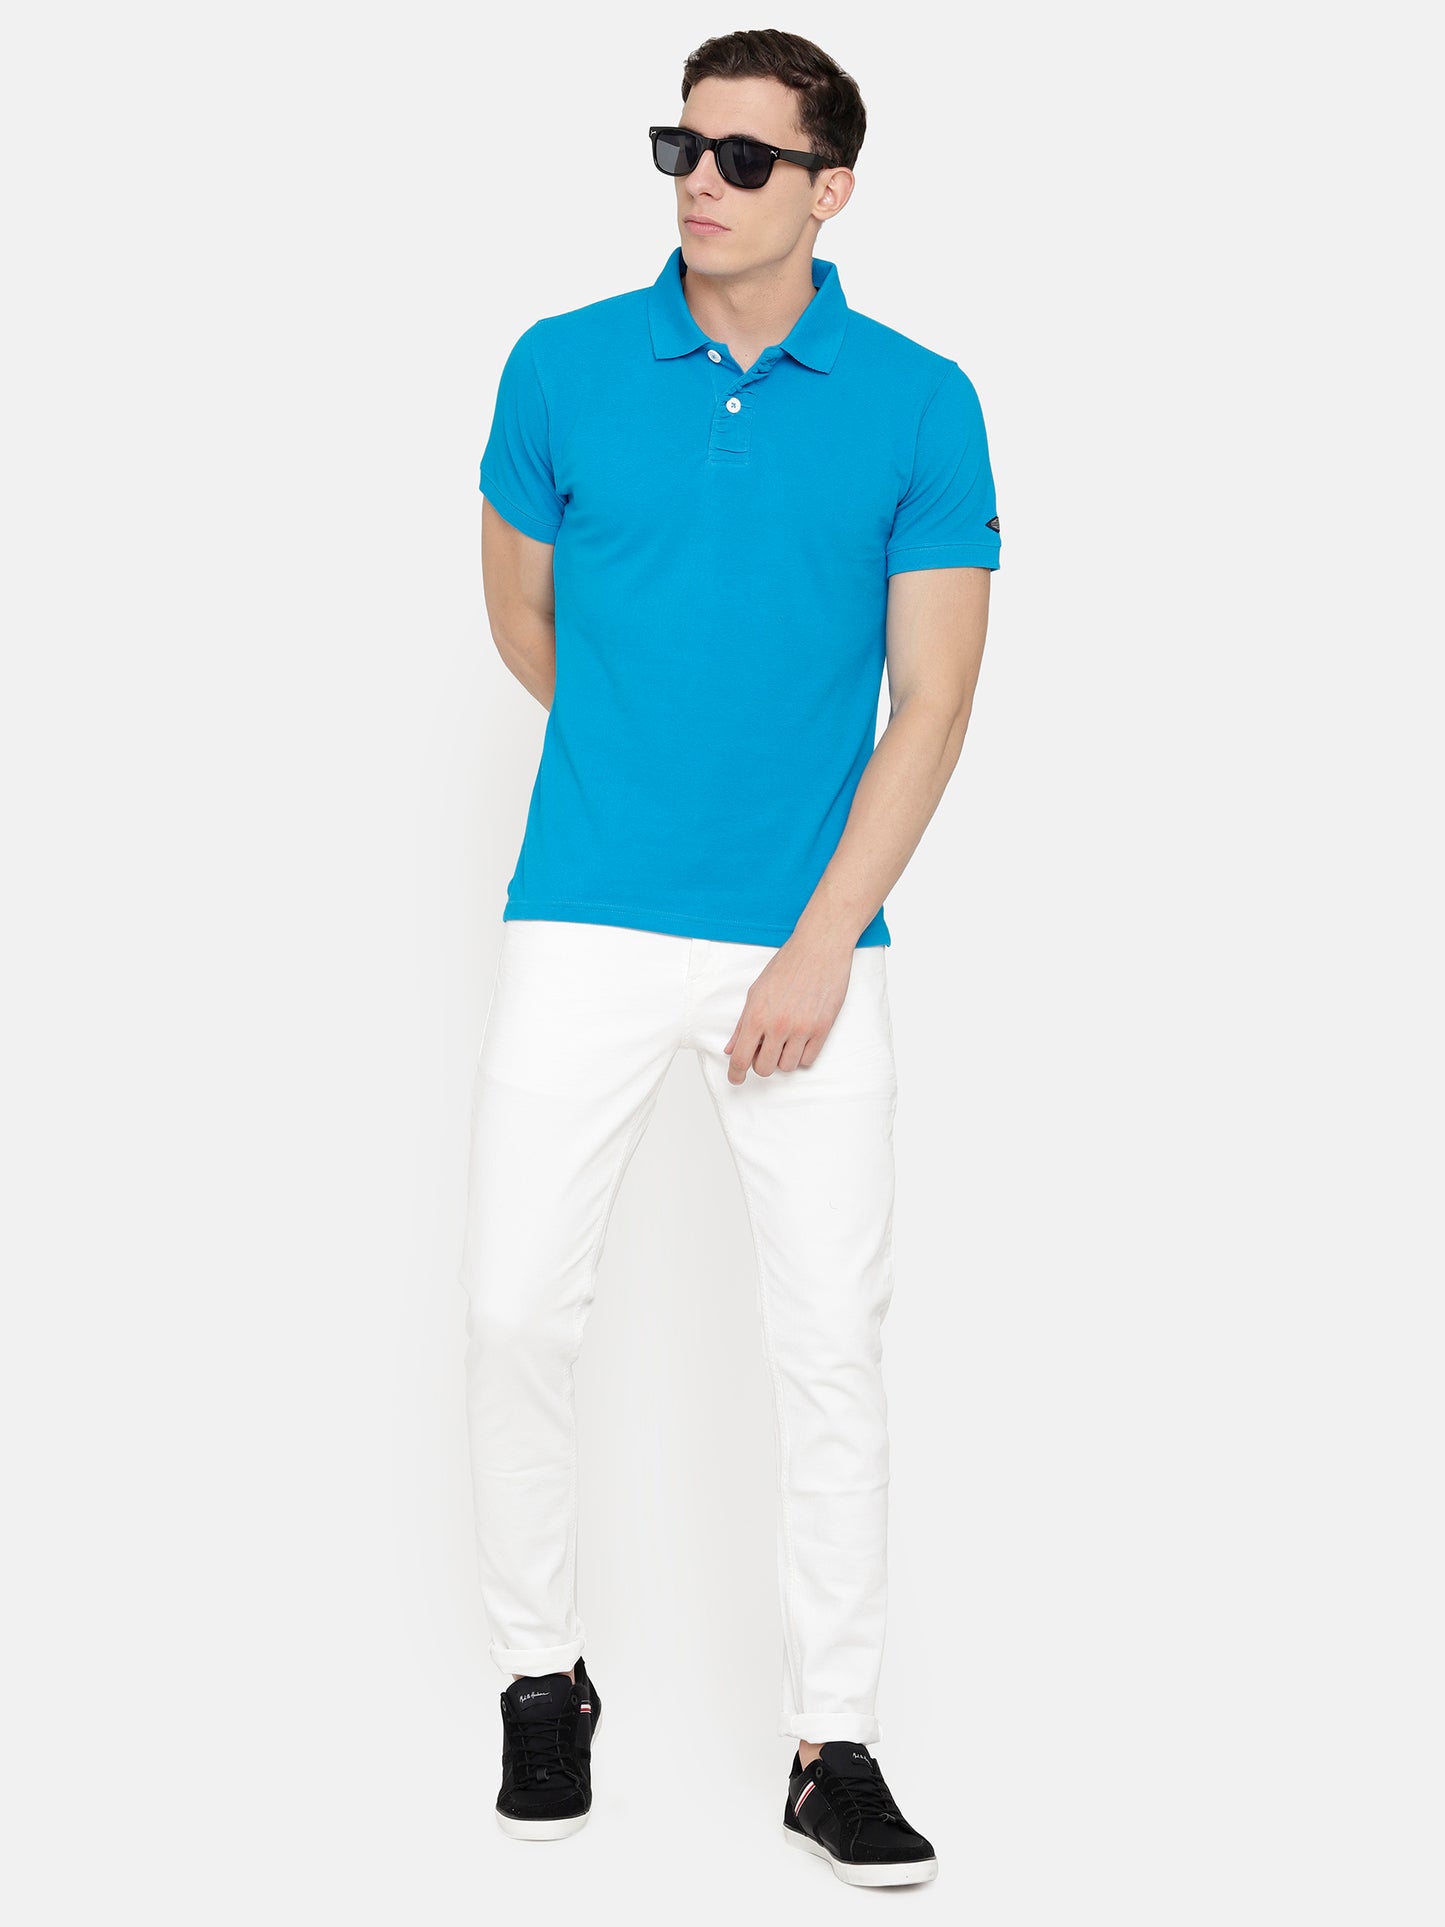 Blue Polo T-Shirt pique